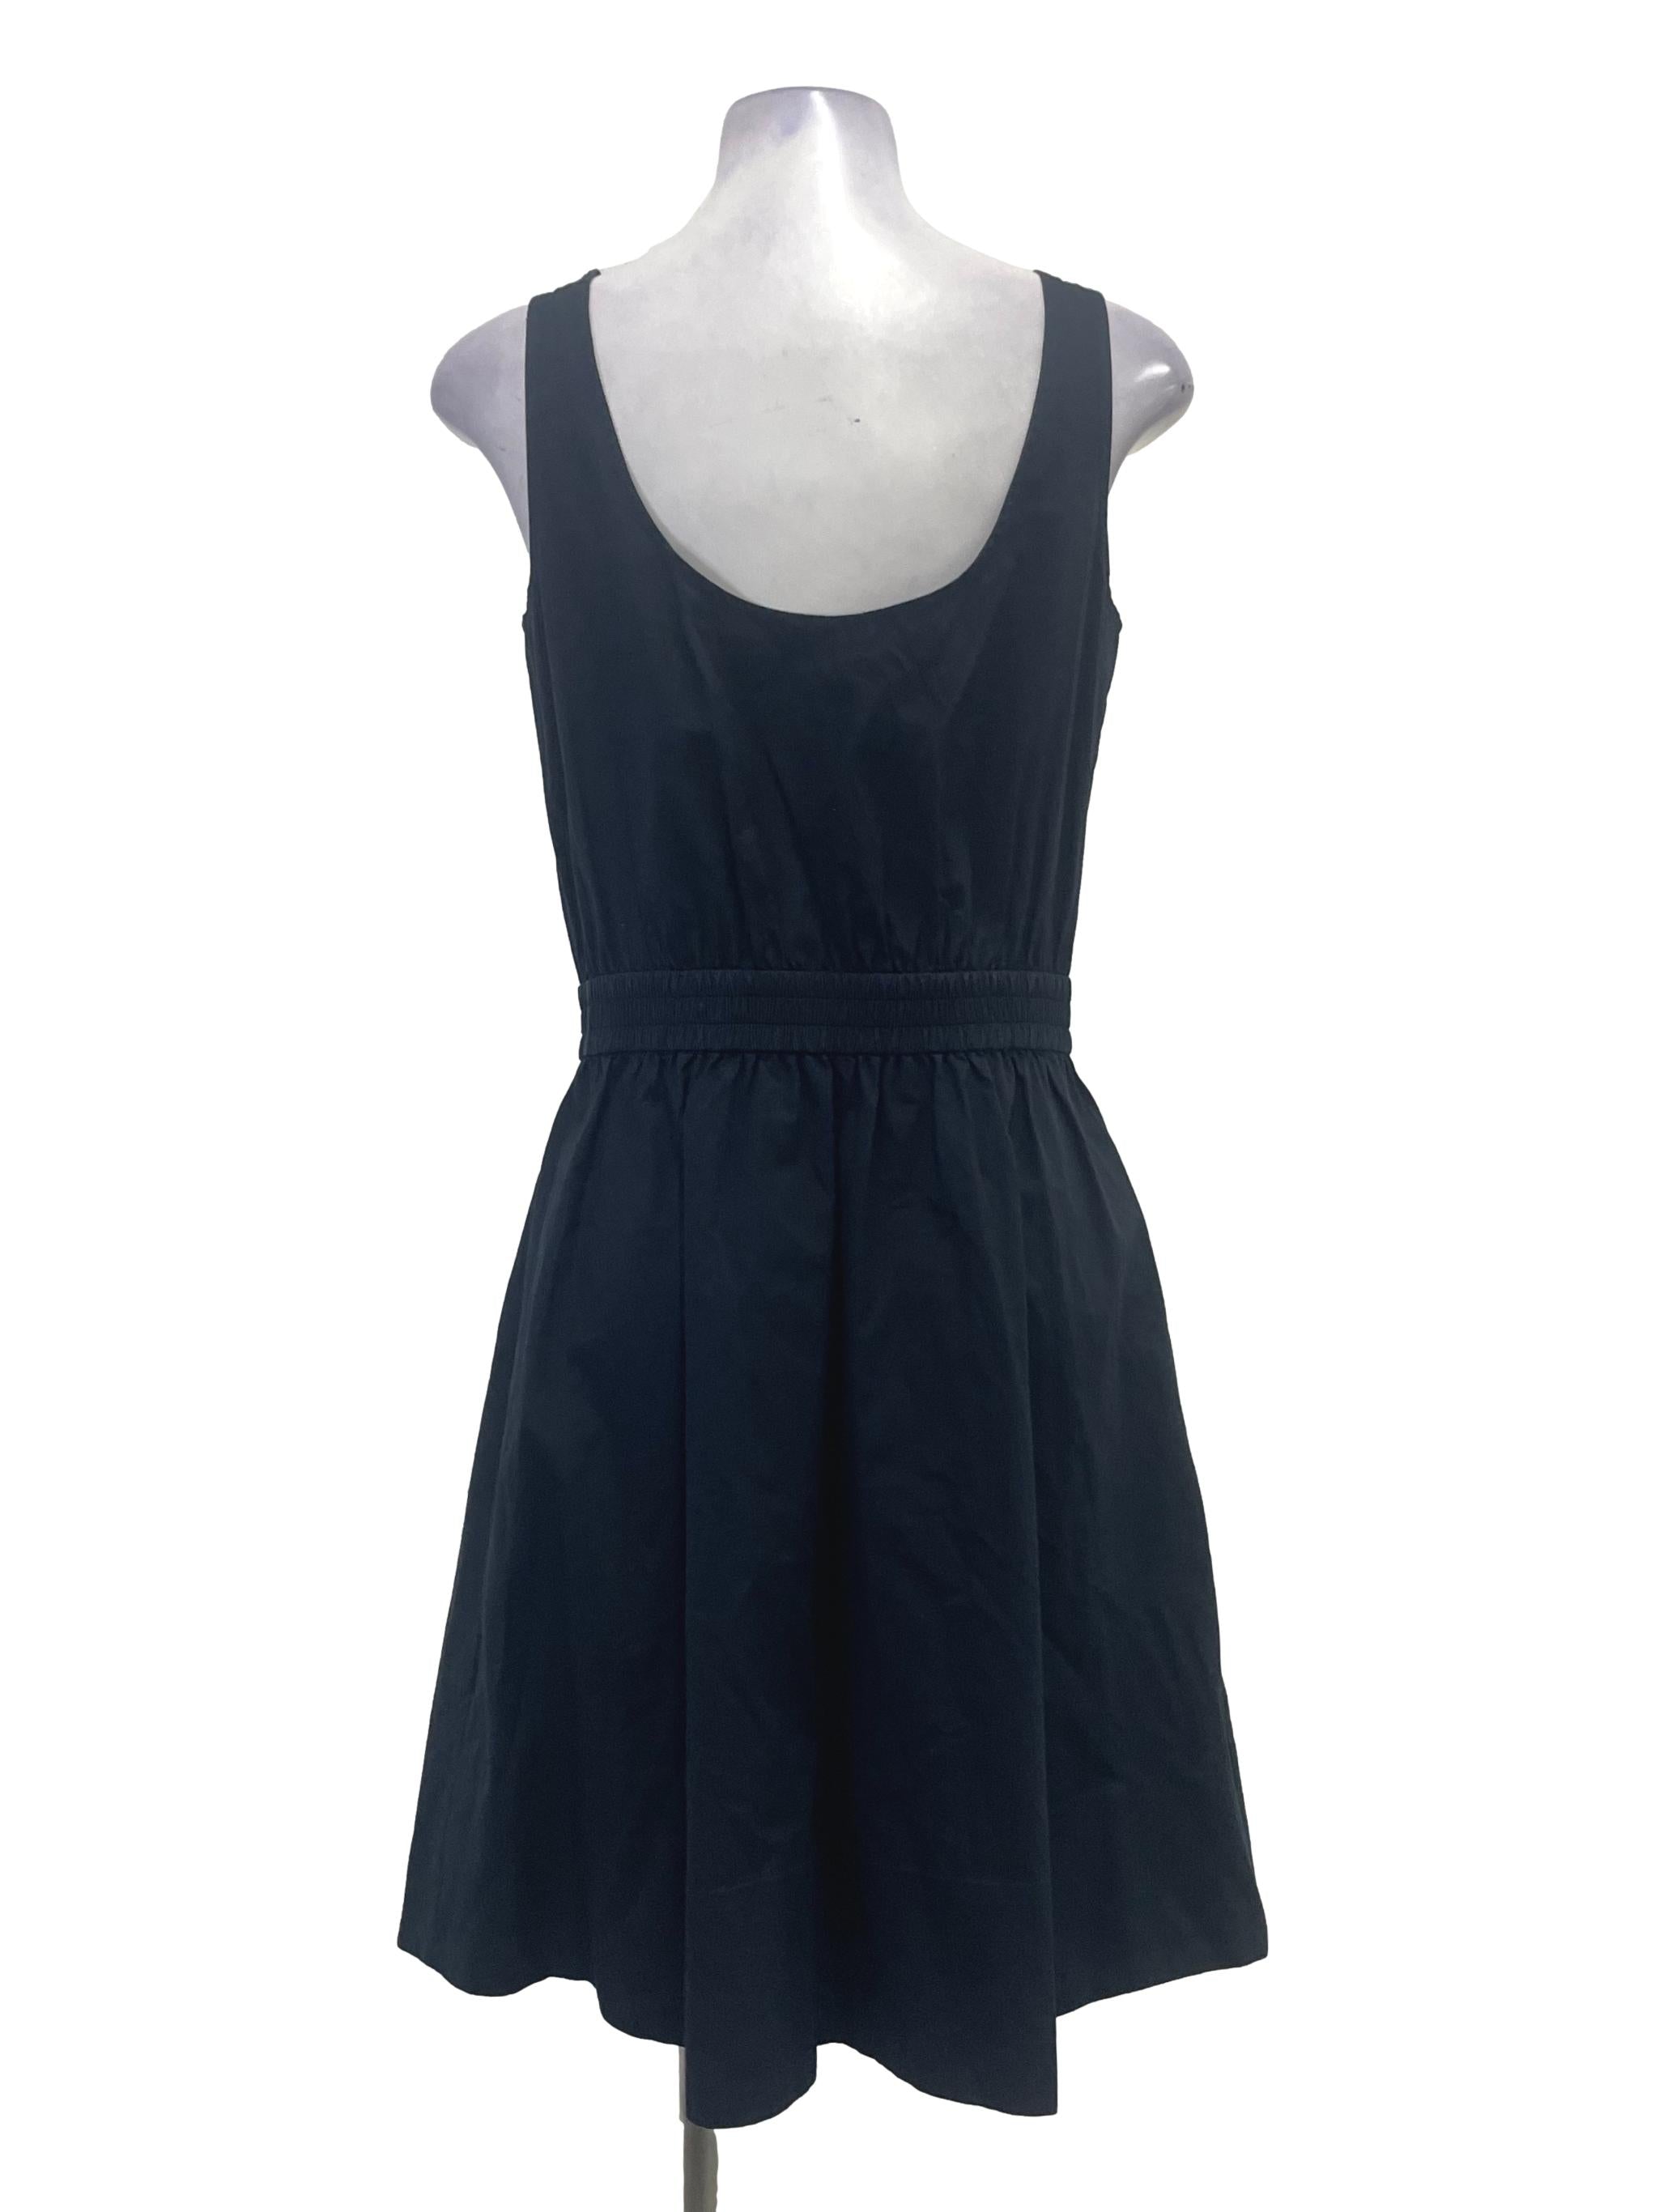 Black U-Neck Sleeveless Dress